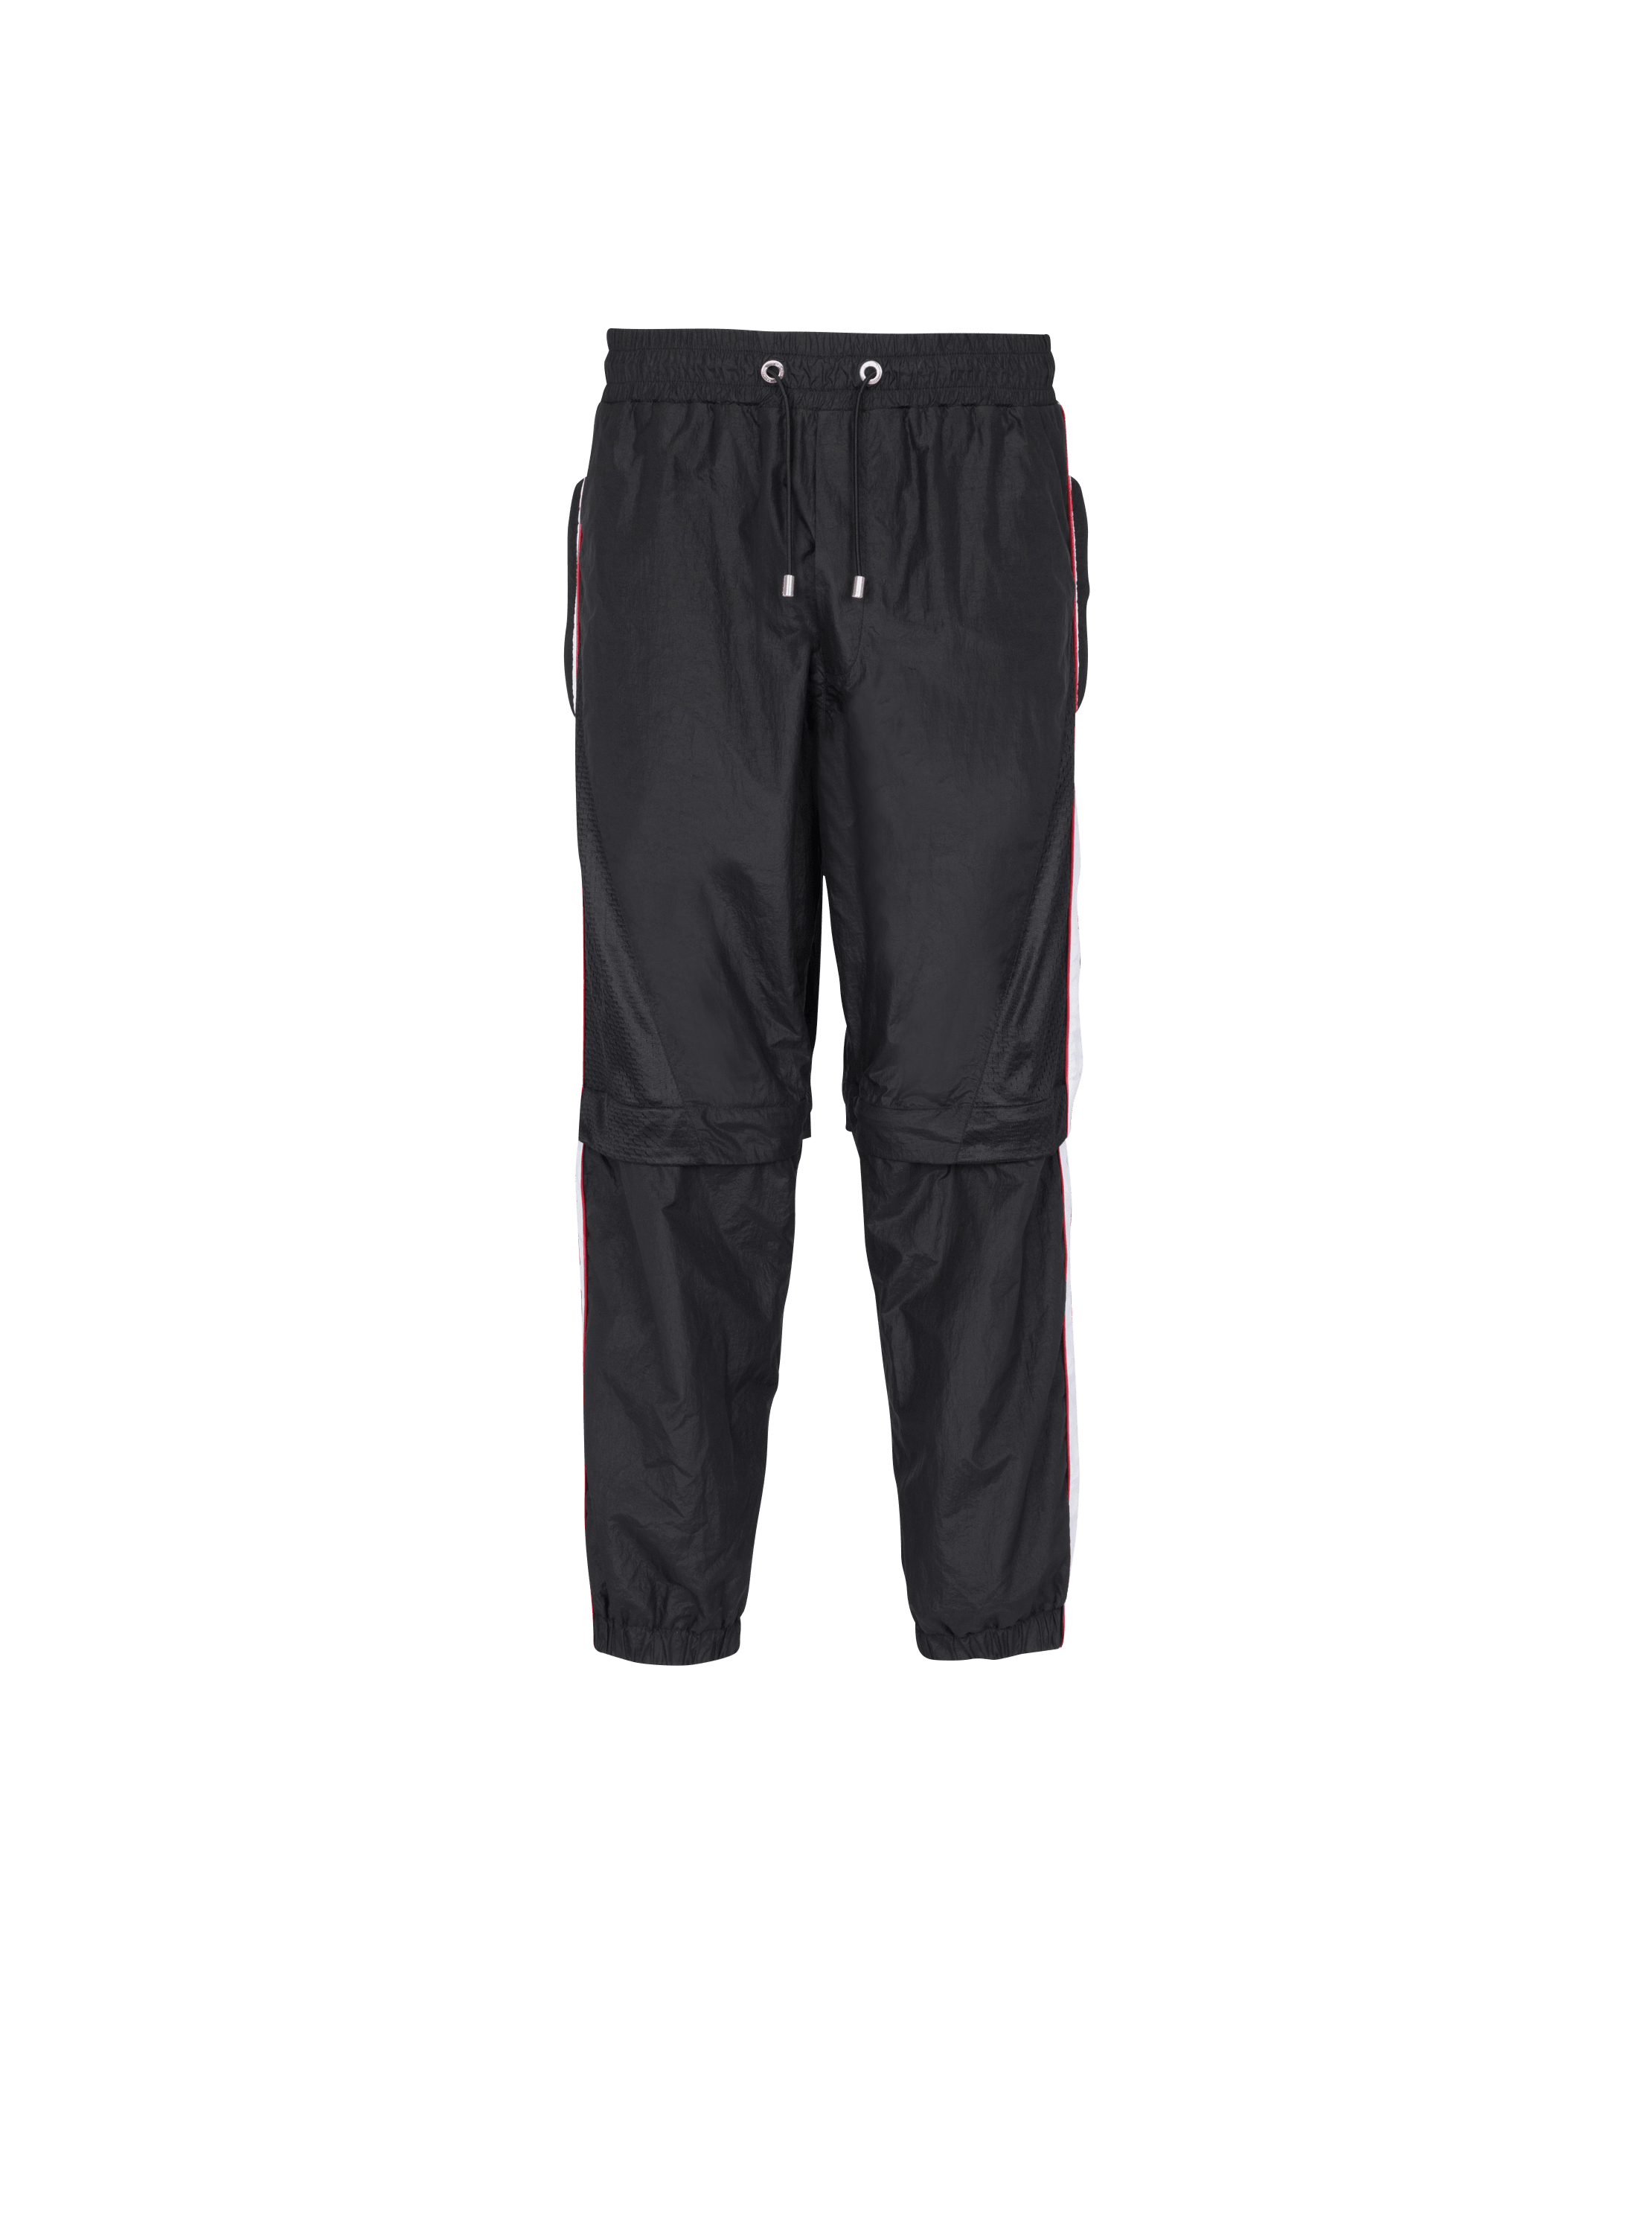 Balmain x Puma - Pantalones de jogging con parte inferior extraíble